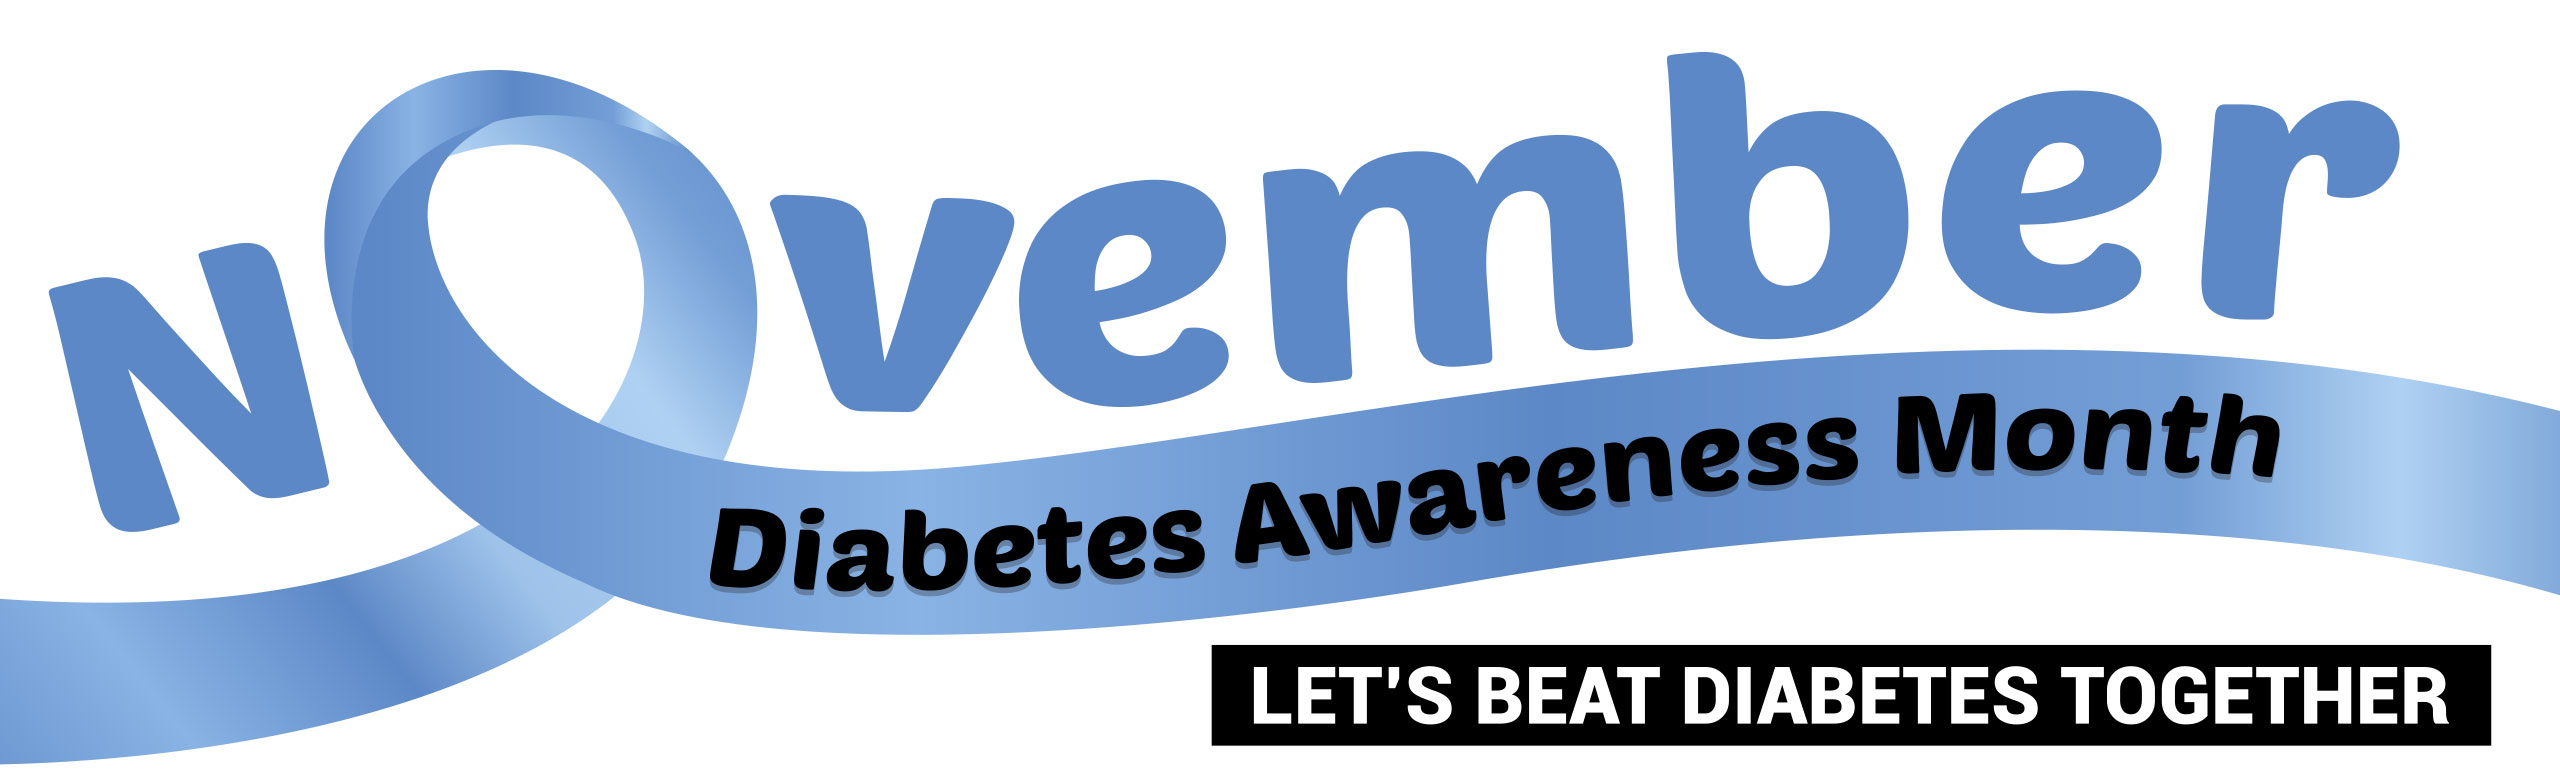 November Diabetes Awareness Month